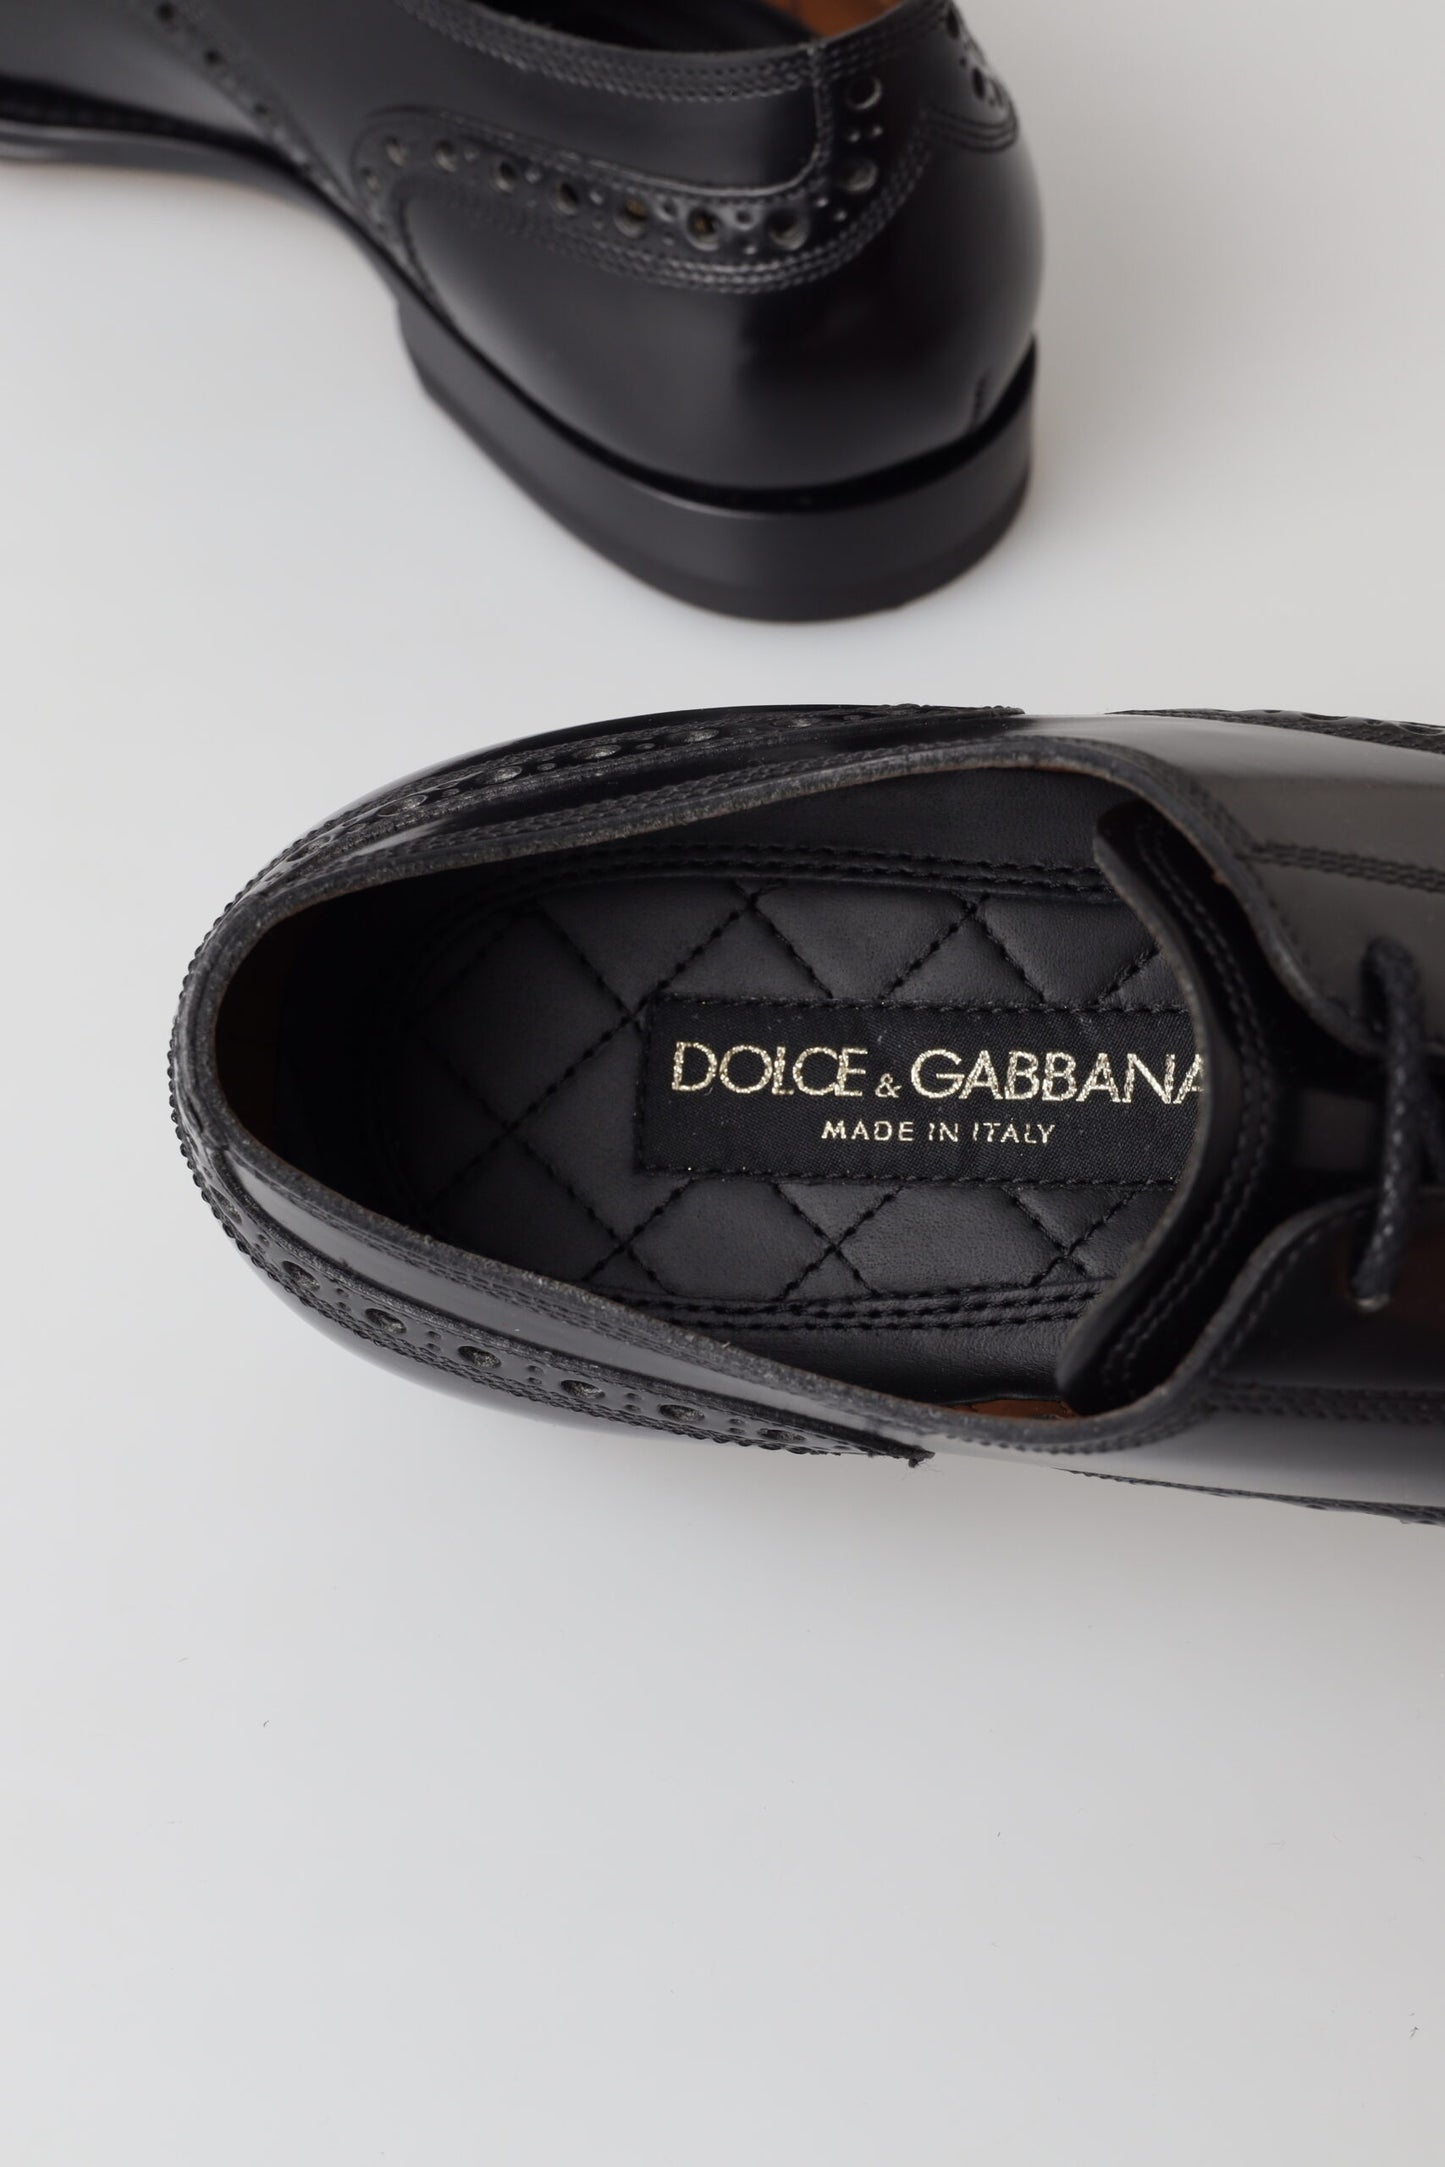 Dolce & Gabbana en cuir noir Oxford Wingtip Derby Formal Derby